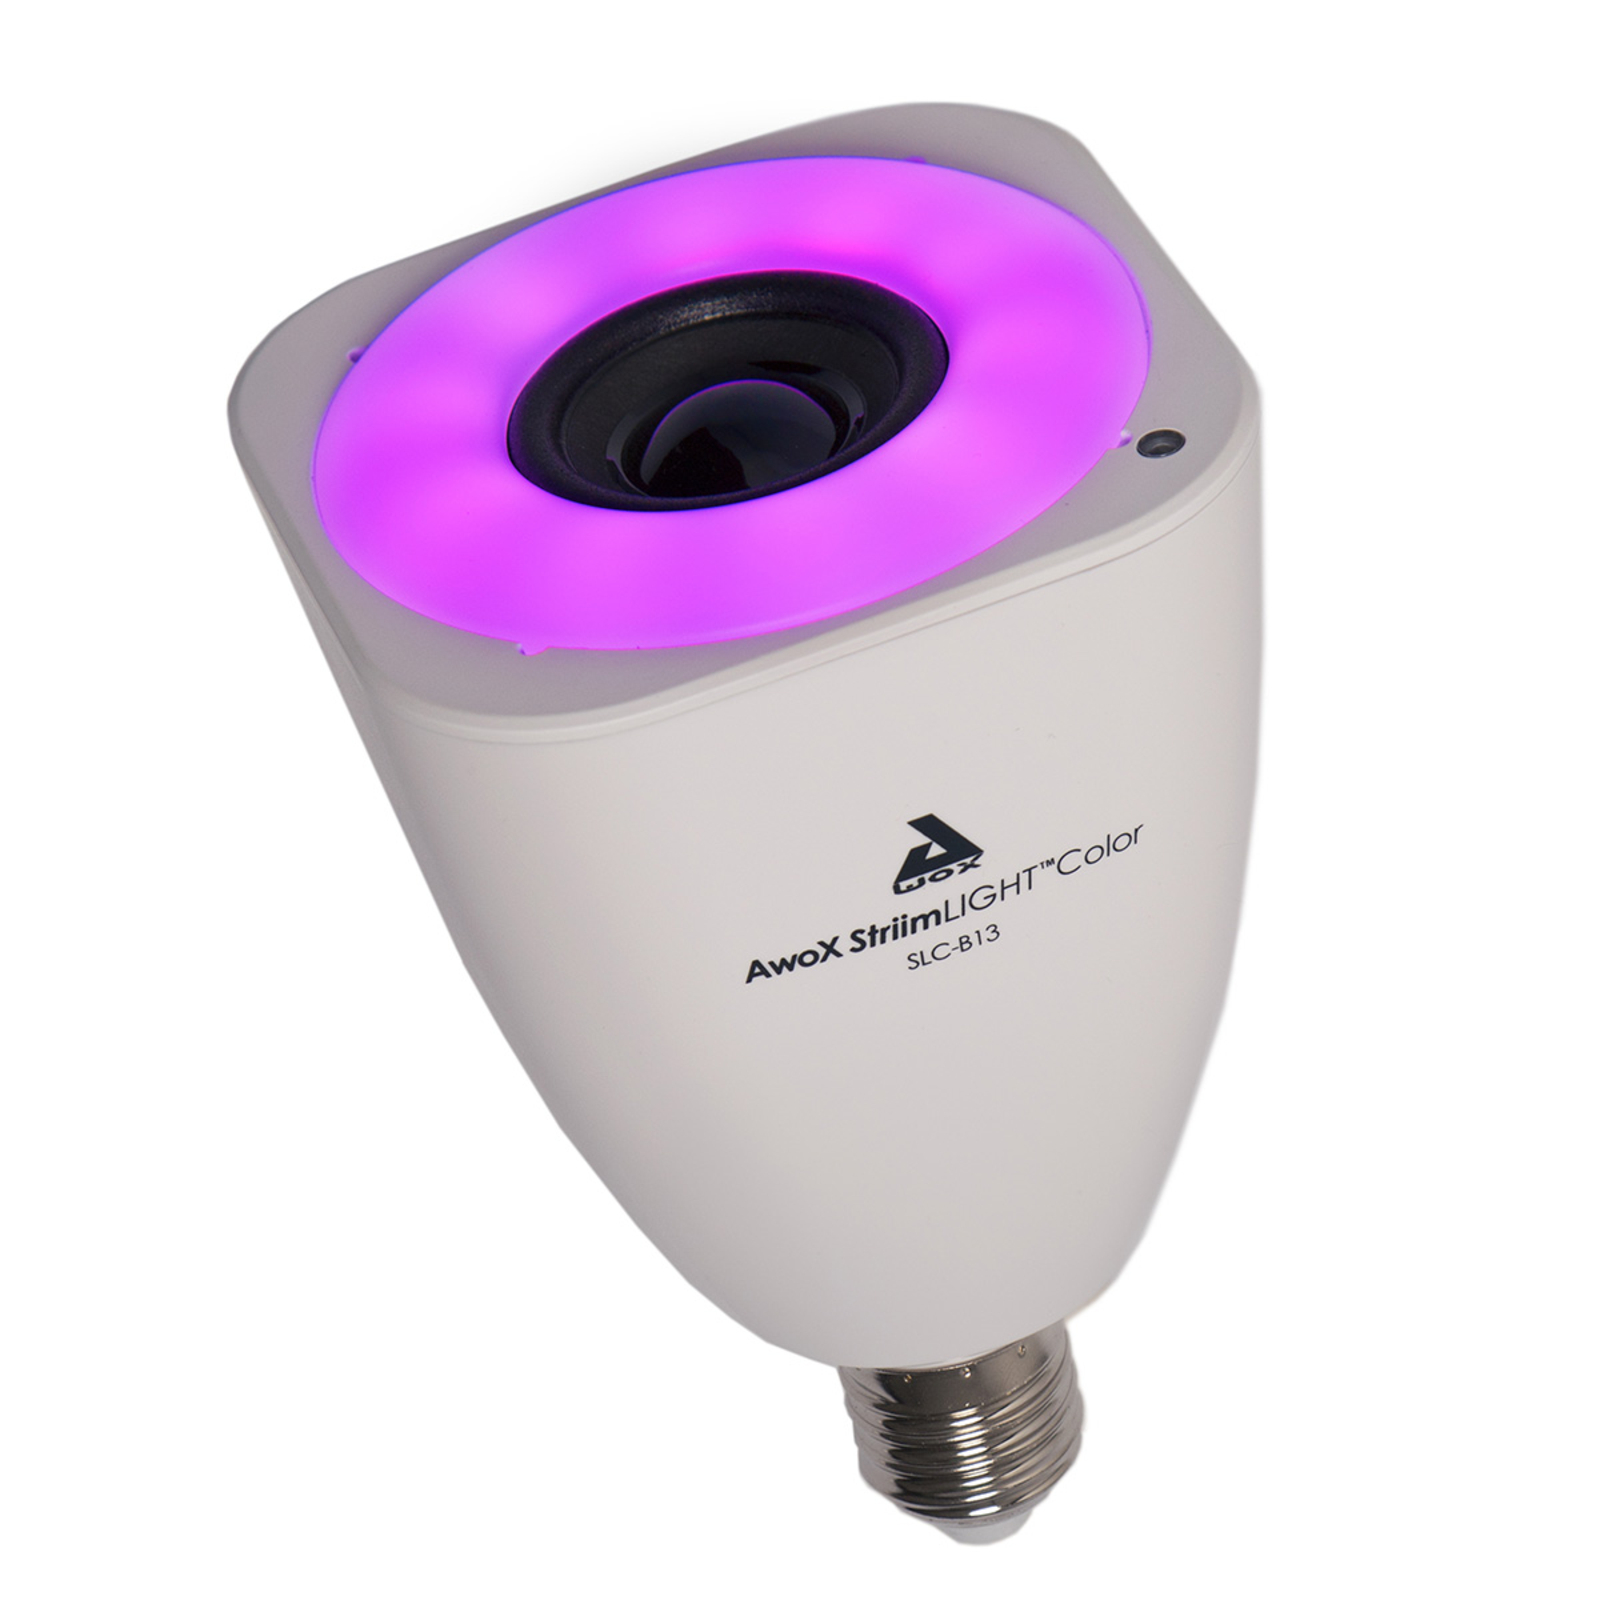 AwoX StriimLIGHT Color ampoule LED E27, Bluetooth